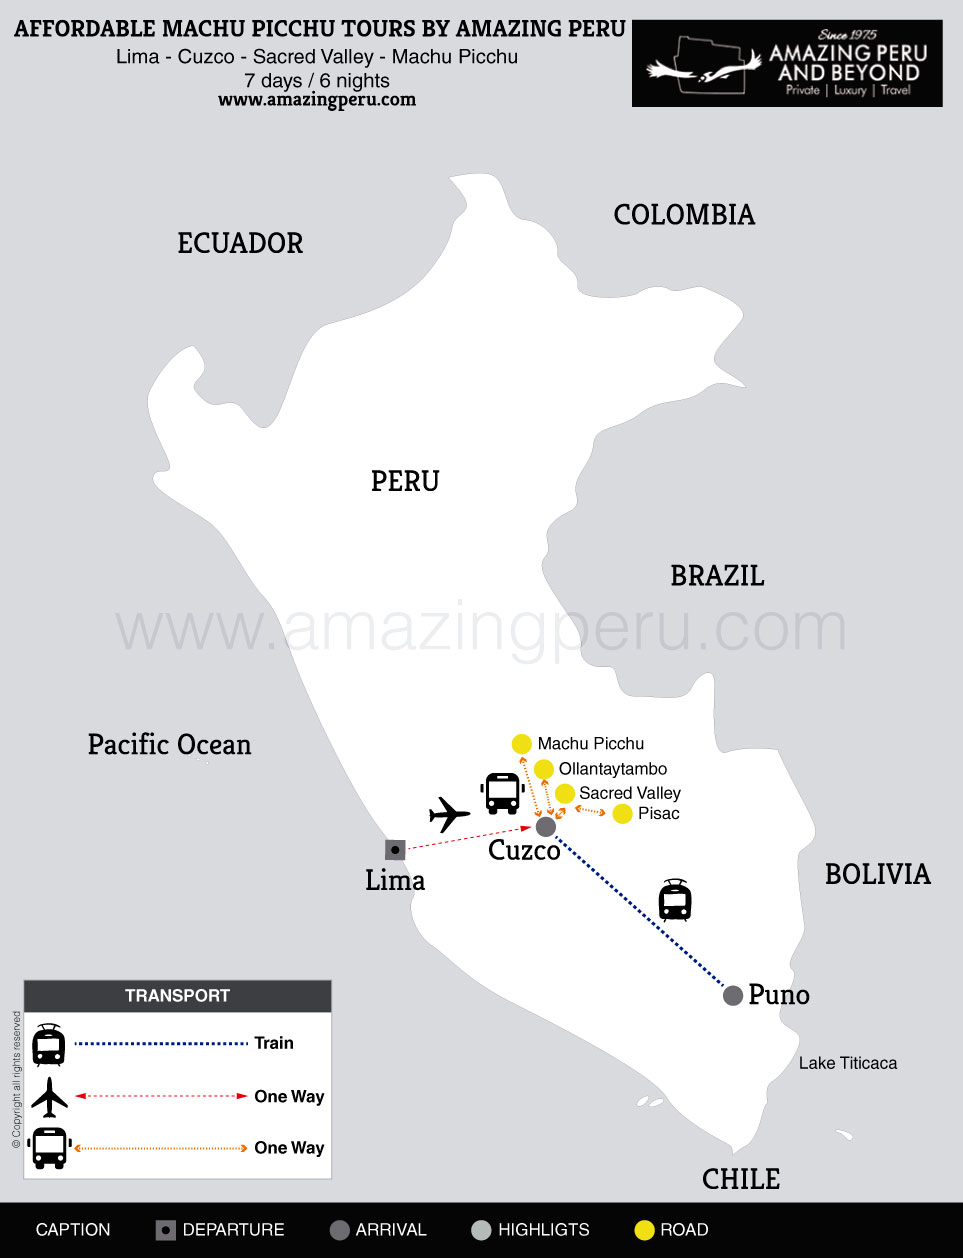 2022 Affordable Machu Picchu Tours by Amazing Peru - 7 days / 6 nights.